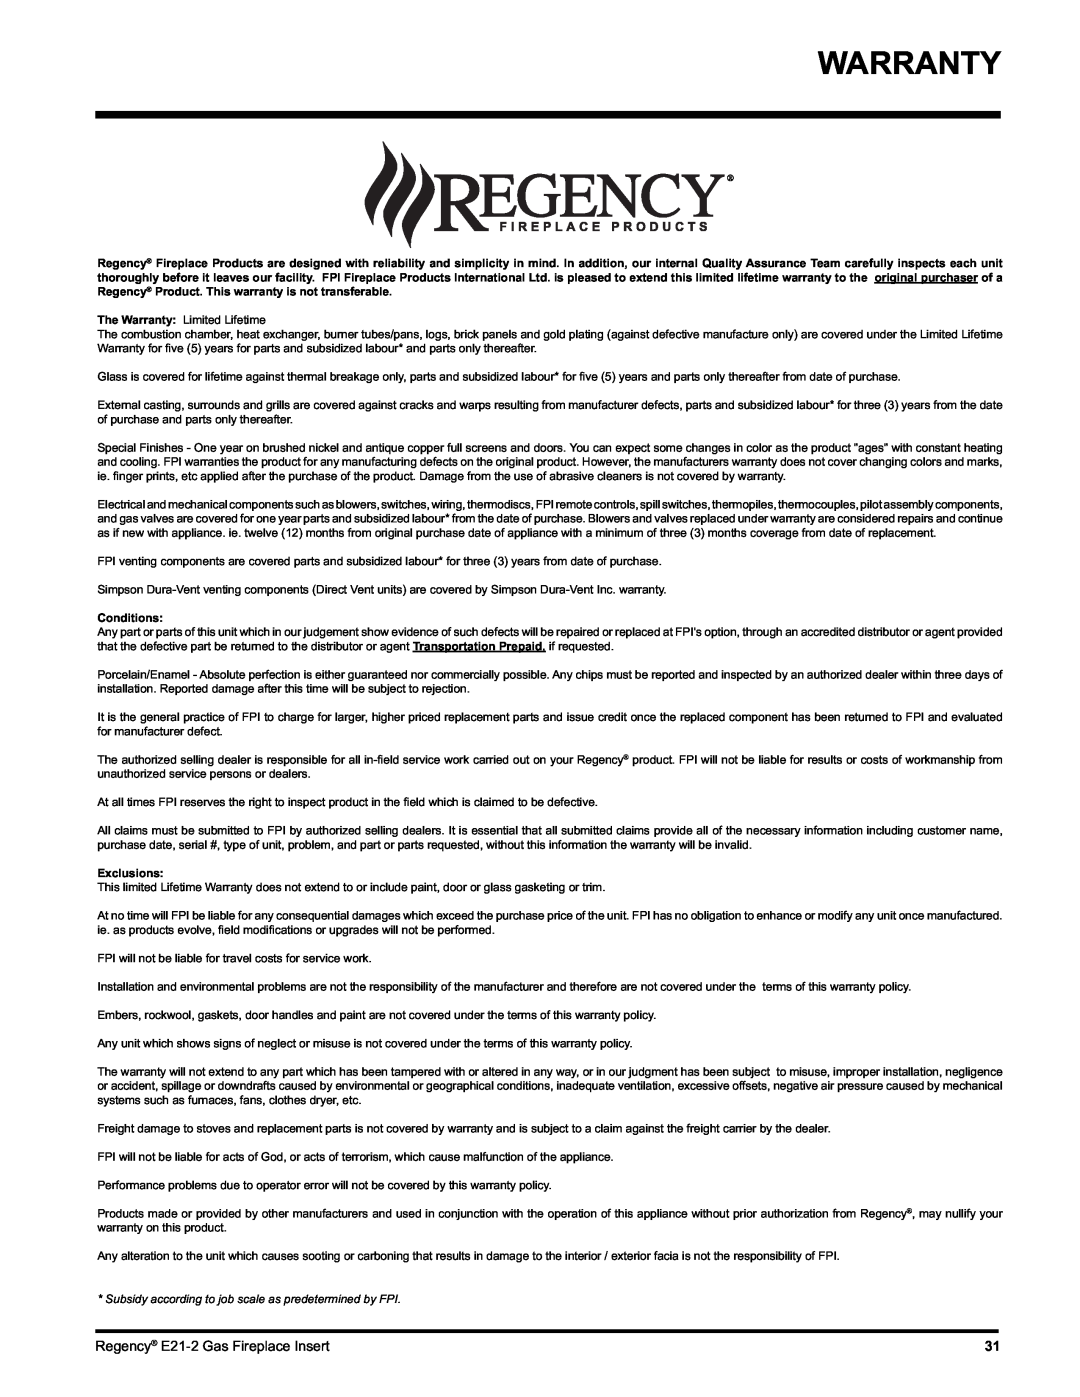 Regency E21-NG2, E21-LP2 installation manual Warranty, Conditions, Exclusions 